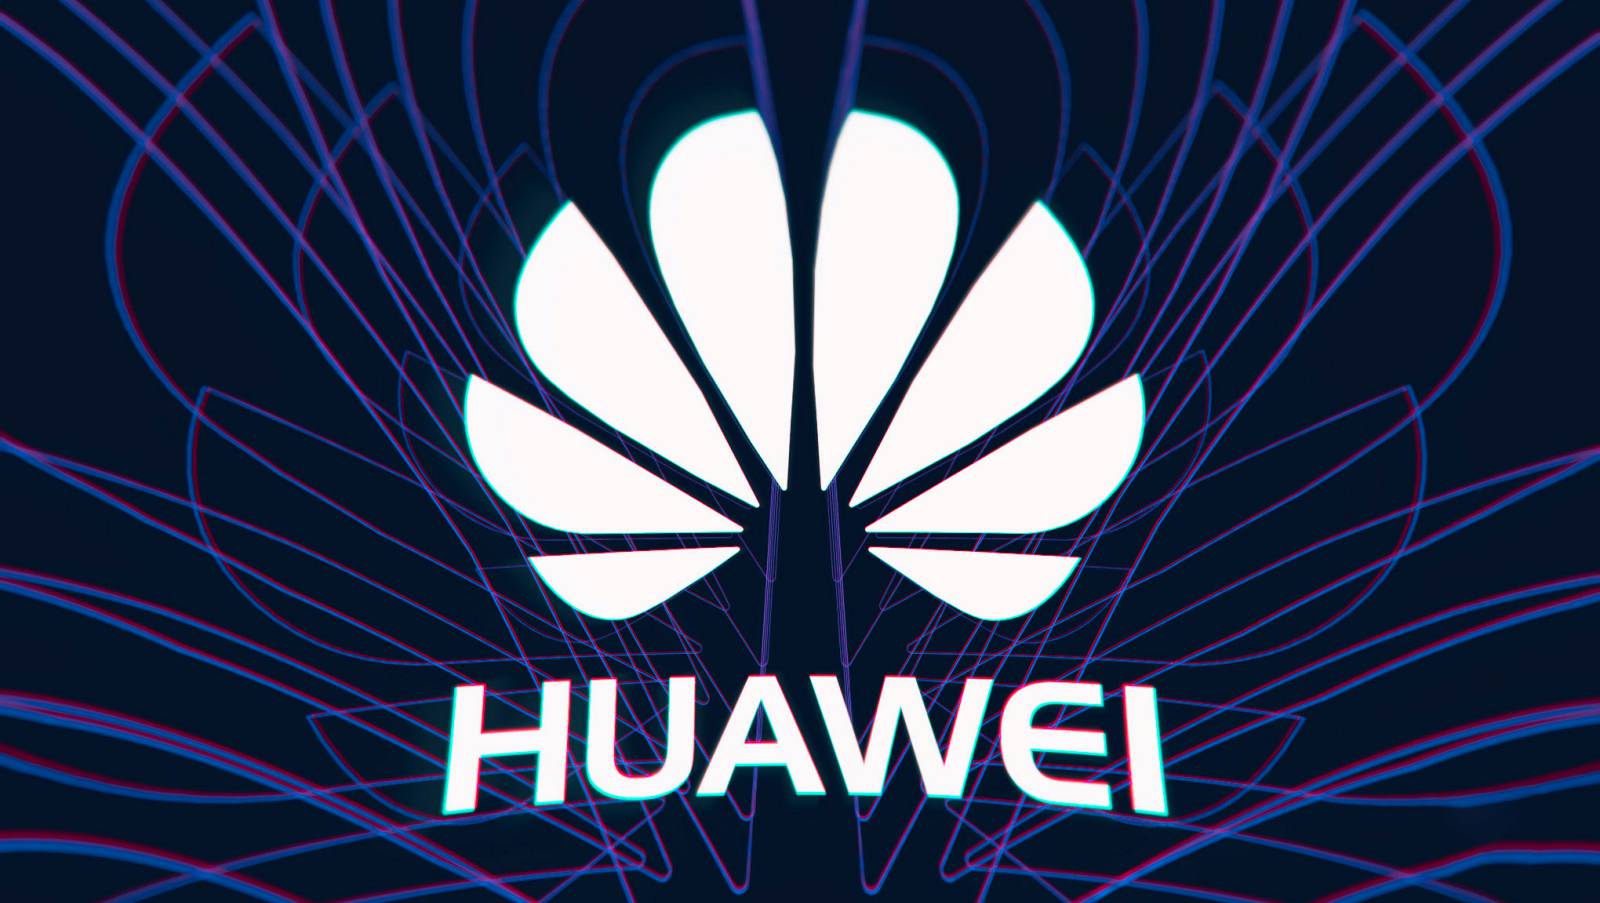 Huawei hired military secret bags